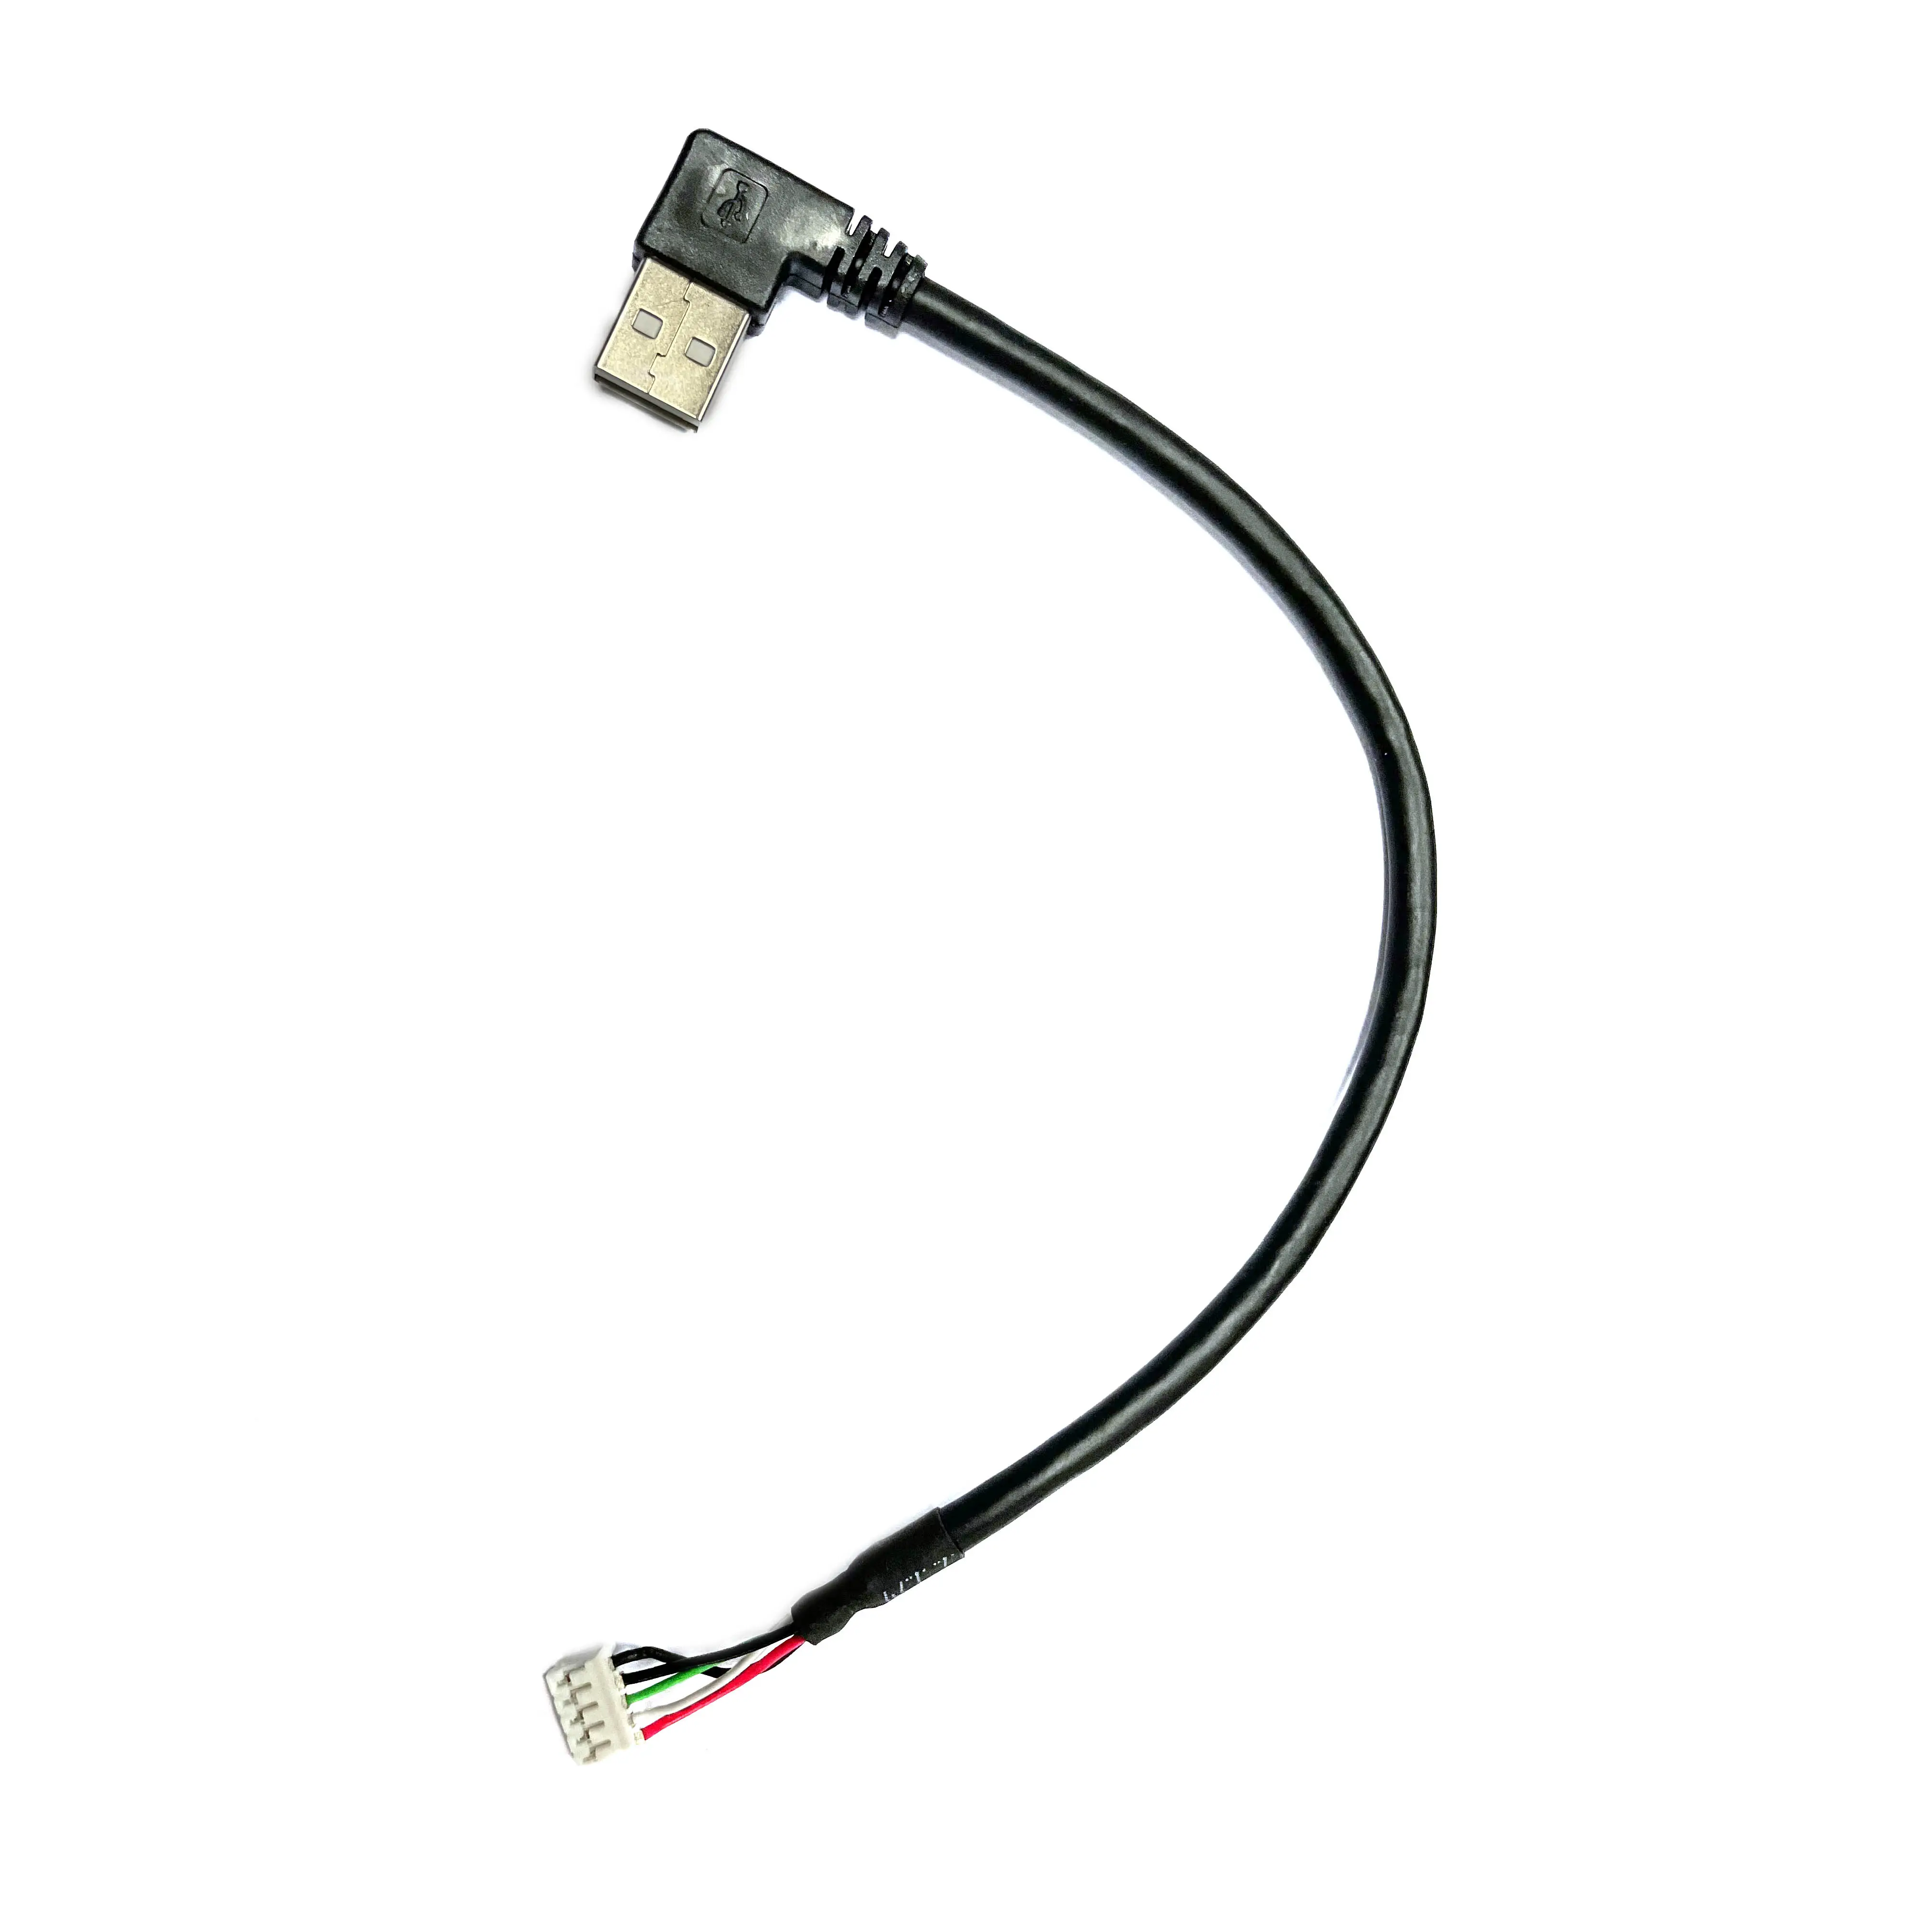 Kustom Konektor USB A Male Kualitas Tinggi Ke Kabel Molex 5-Pin Rakitan Kawat Lainnya